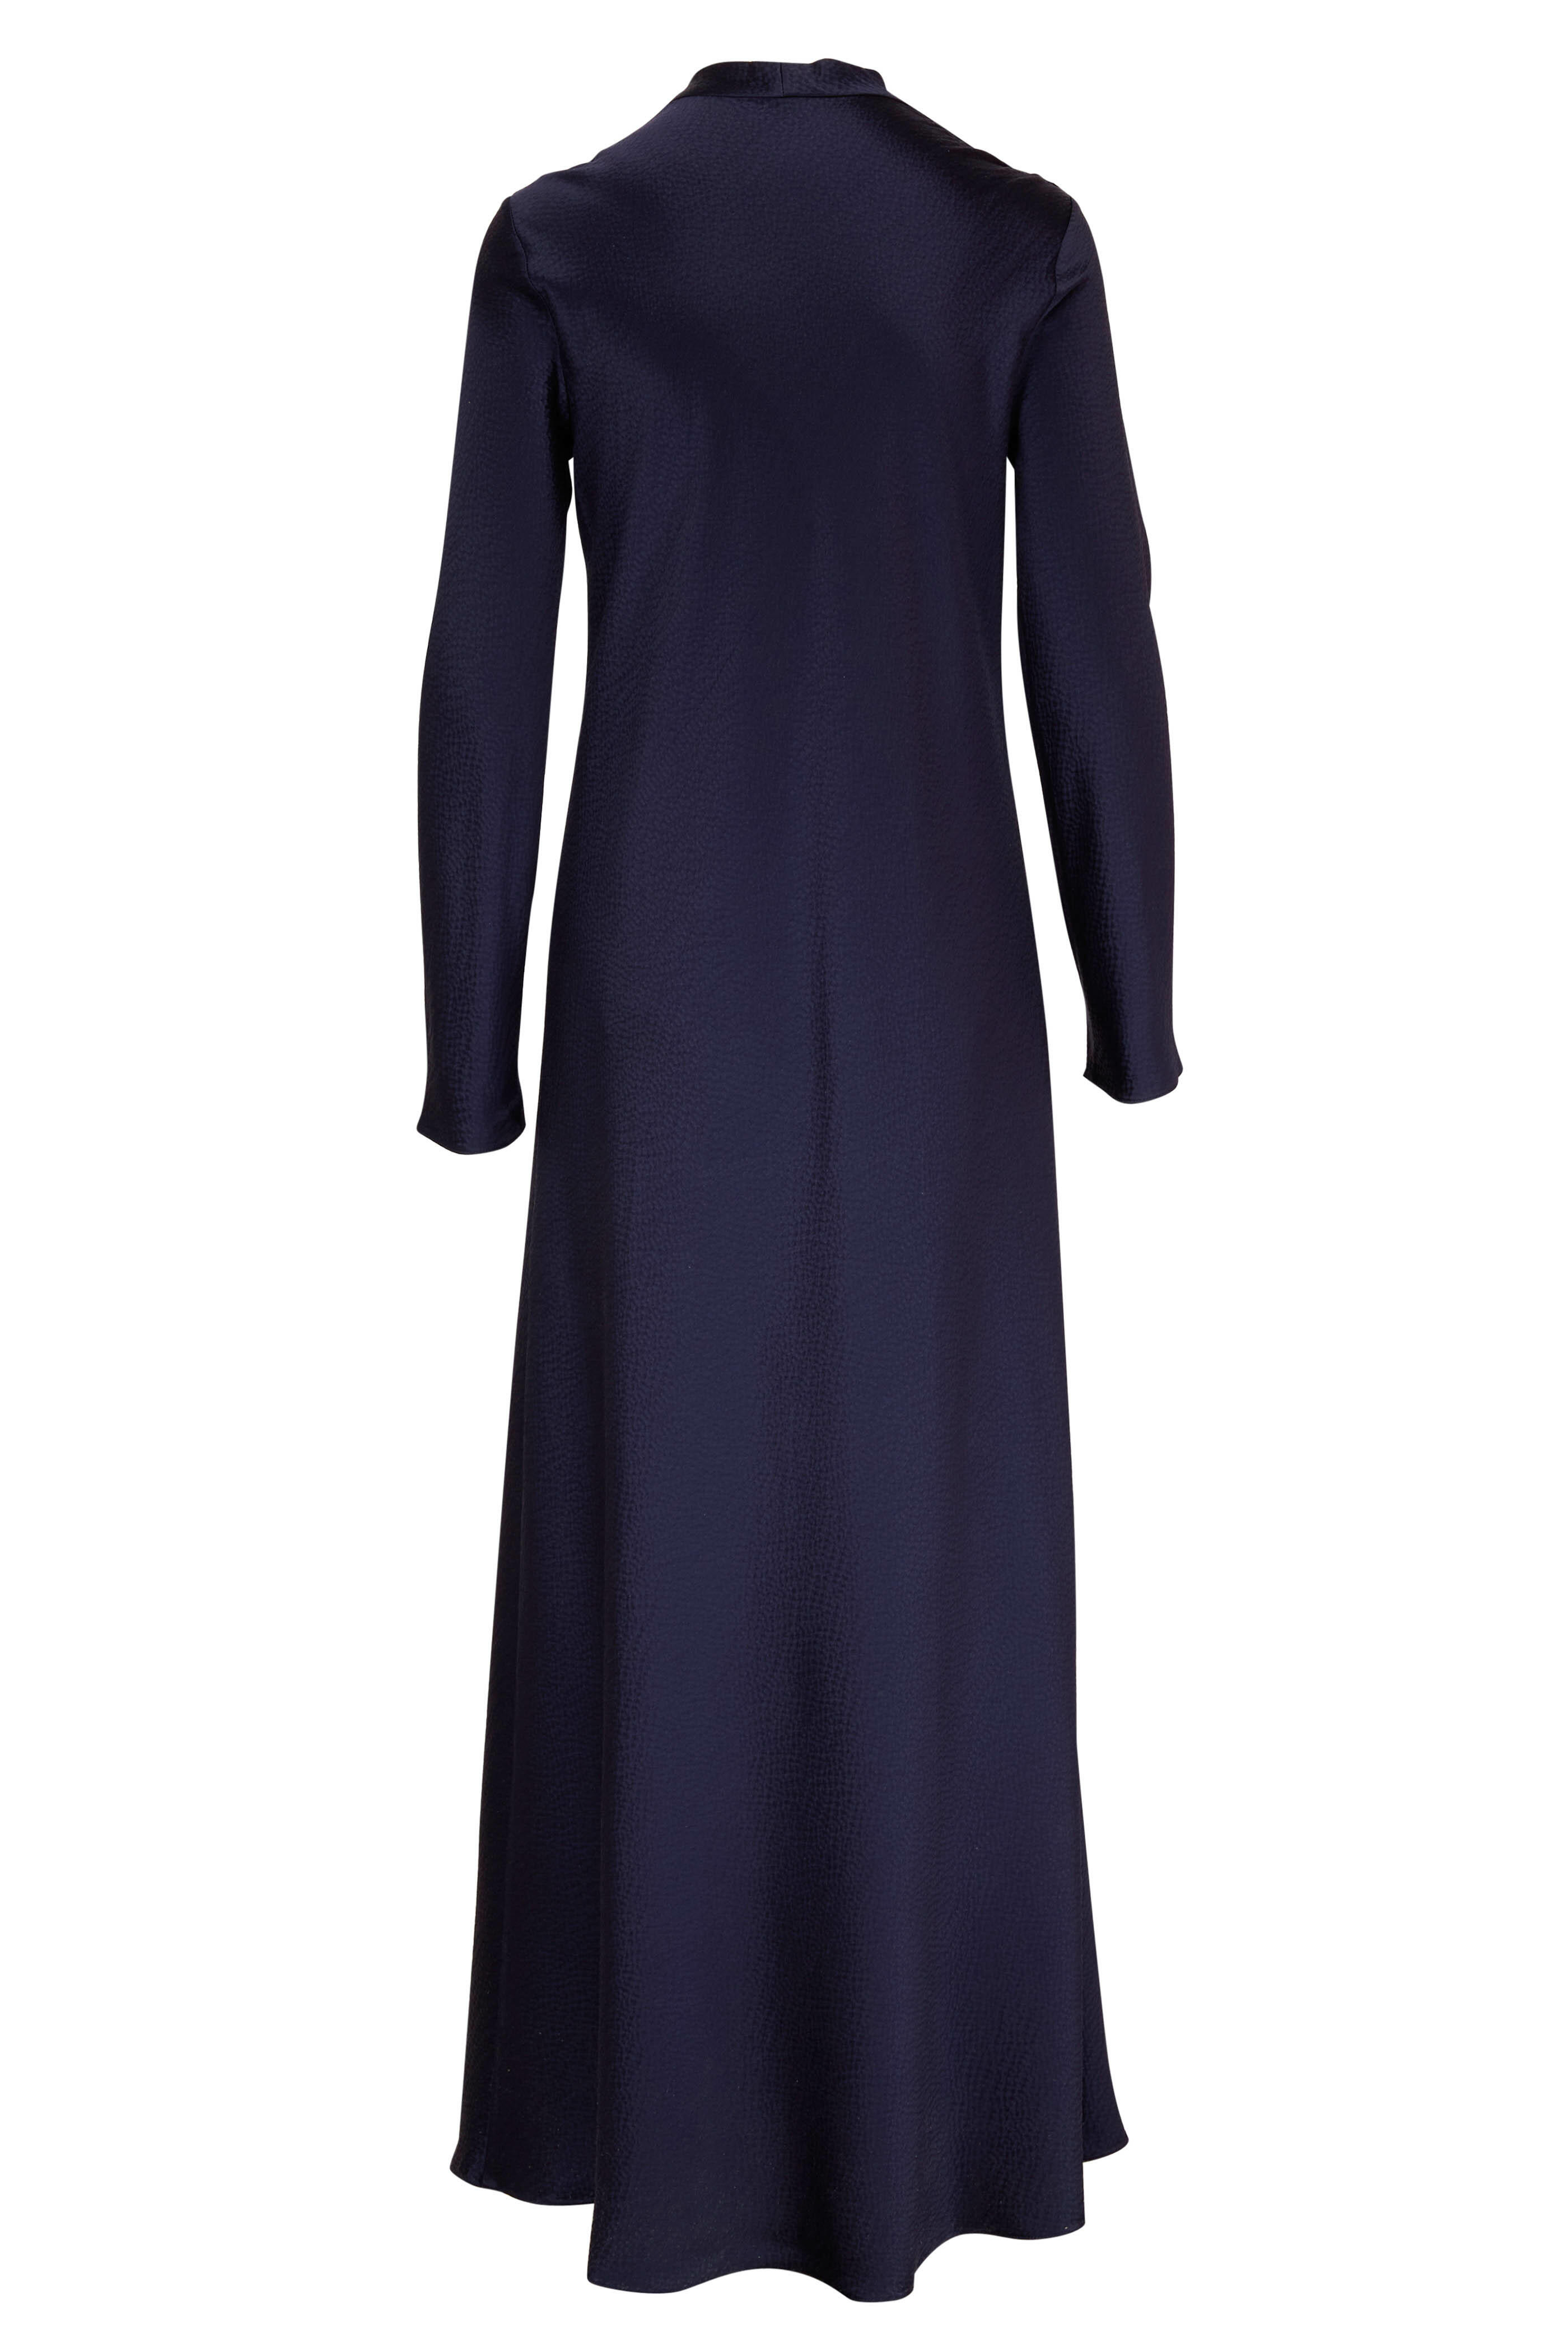 Peter Cohen - Navy Hammered Silk Long Sleeve Cardigan Dress